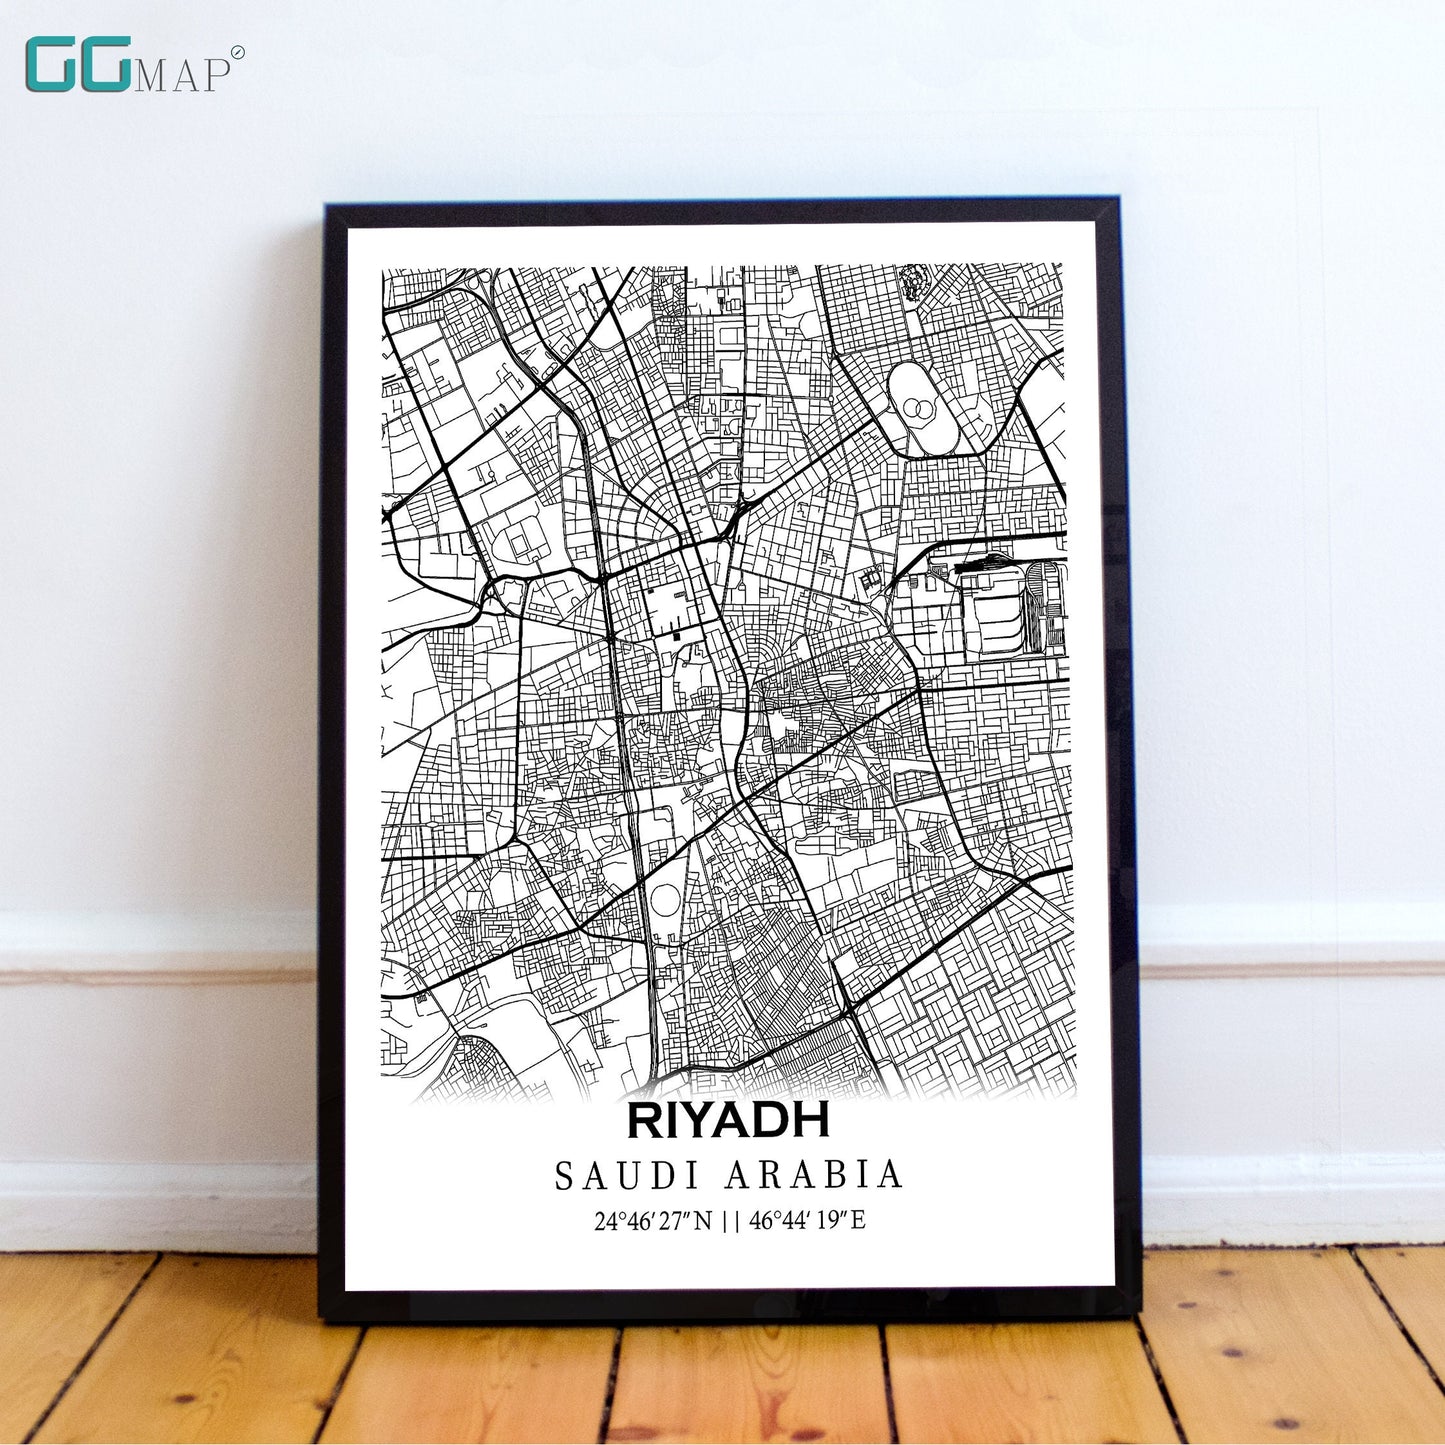 City map of RIYADH - Home Decor - Wall decor - Office map - Travel map -Print map -Poster city map -Riyadh map -GeoGIS Studio - Saudi Arabia